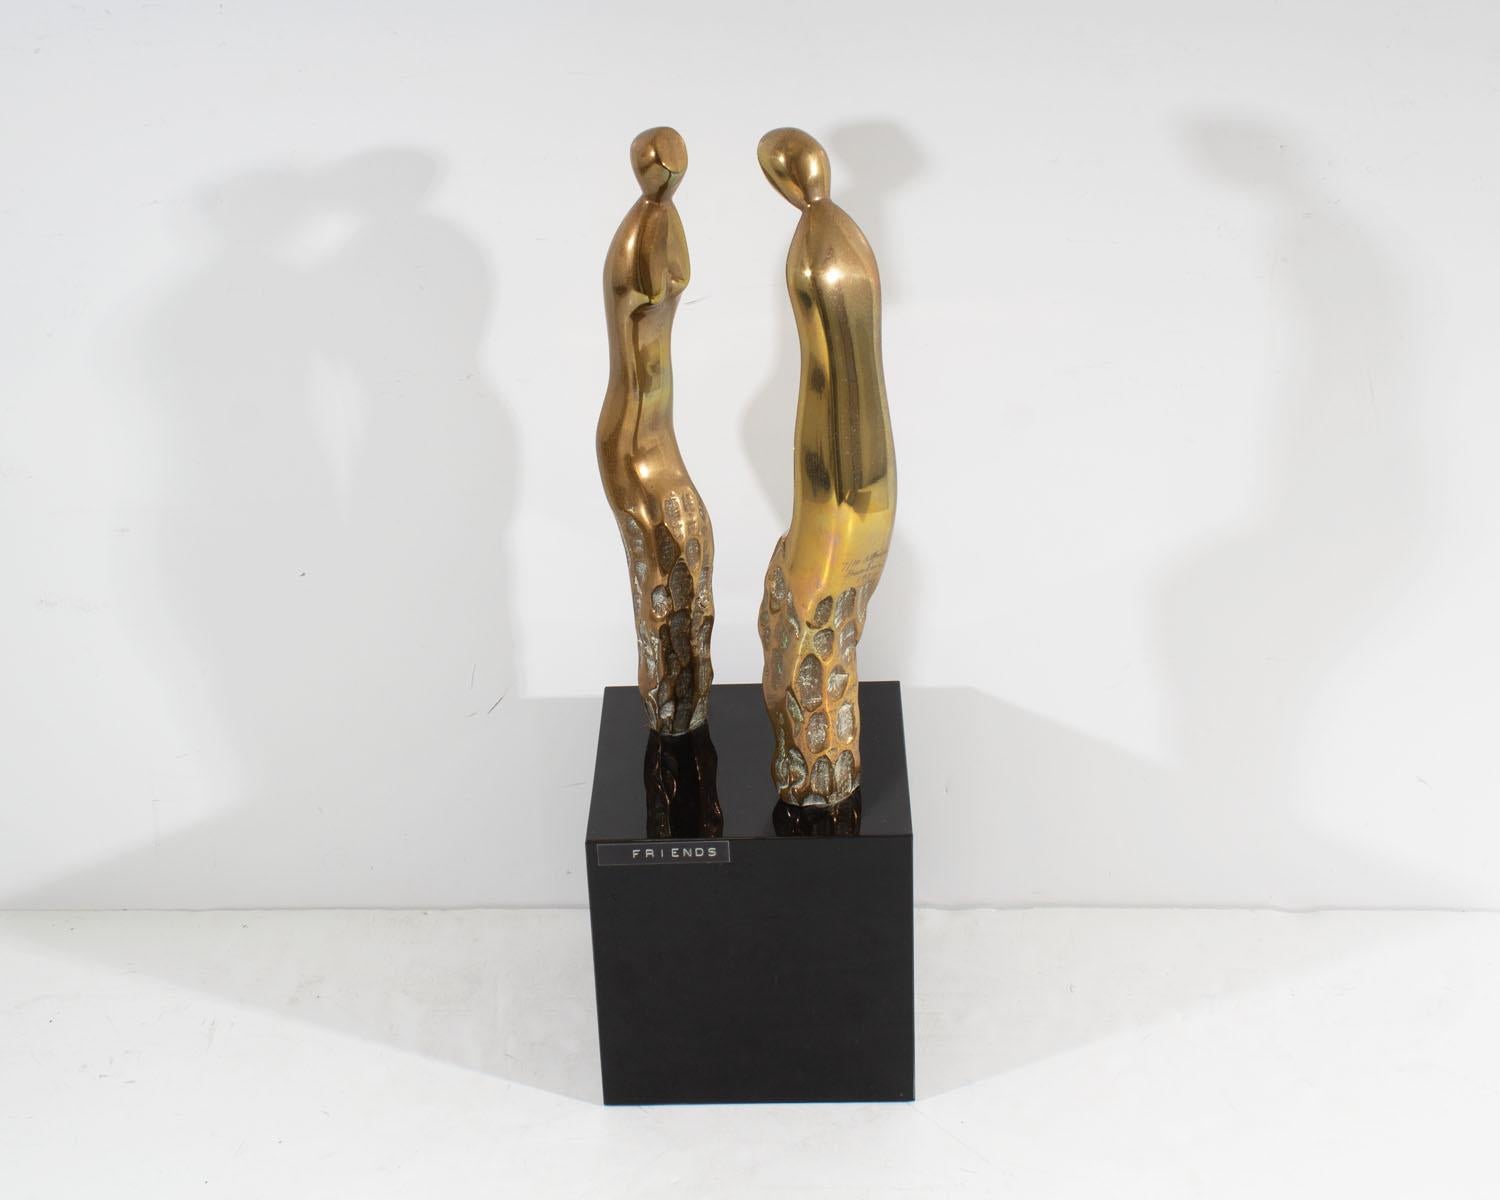 20th Century Alfredo Burlini Signed 1980 “Friends” Bronze Abstract Sculpture